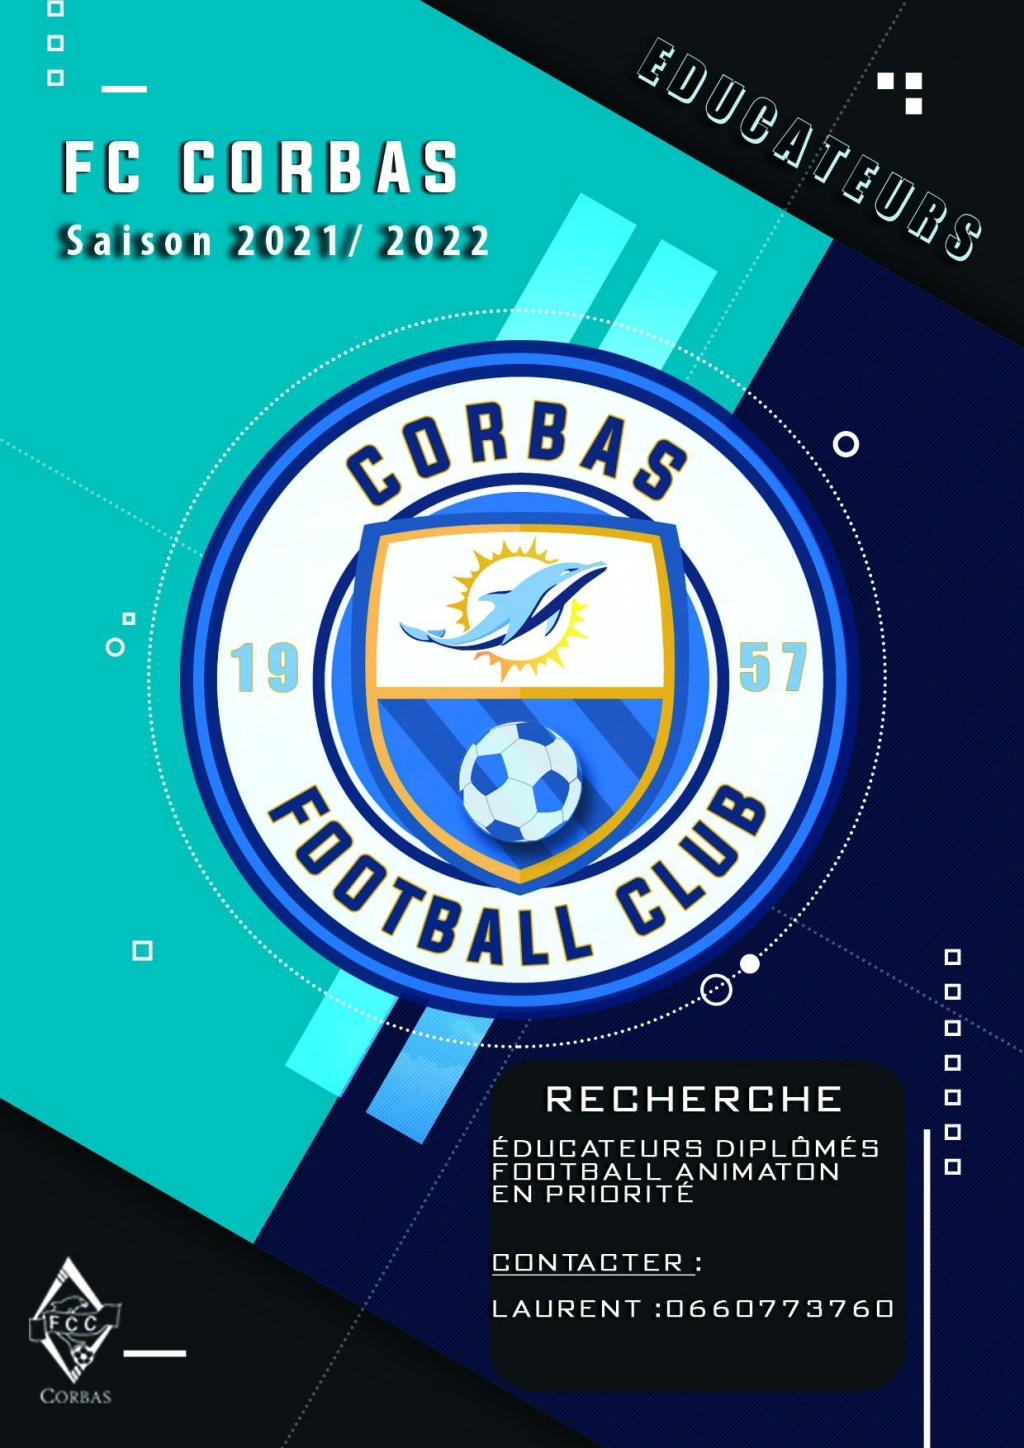 FC CORBAS RECHERCHE EDUCATEURS FOOTBALL ANIMATIONS